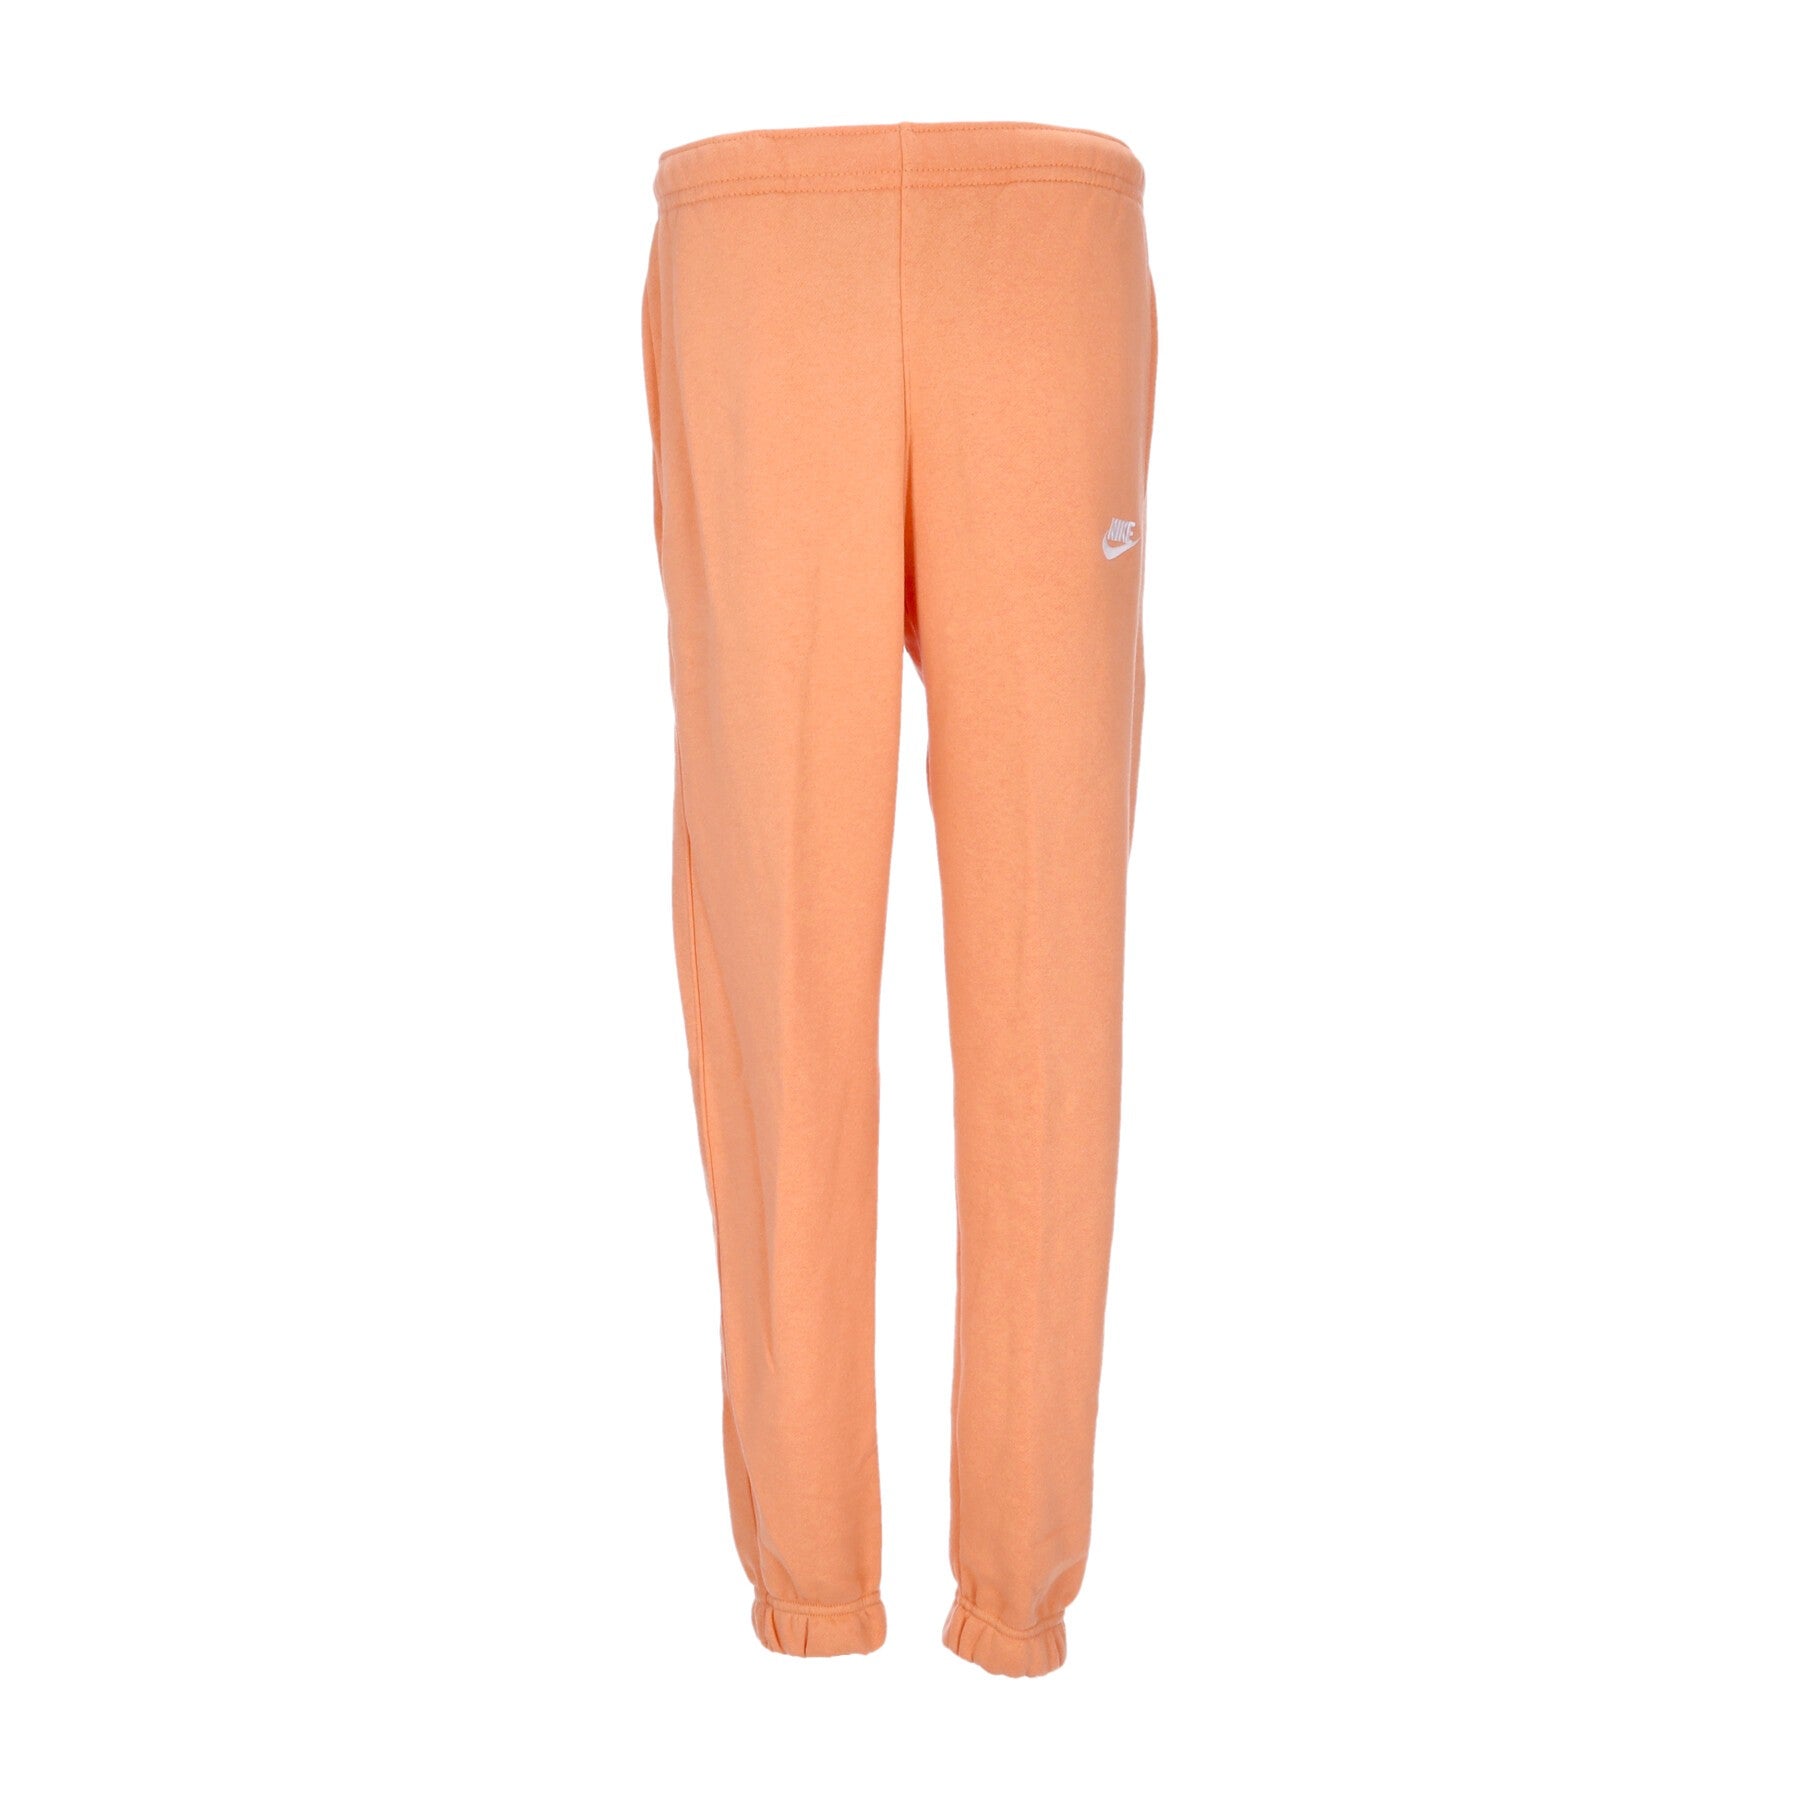 Nike, Pantalone Tuta Felpato Uomo Sportswear Club Fleece, Orange Trance/orange Trance/white